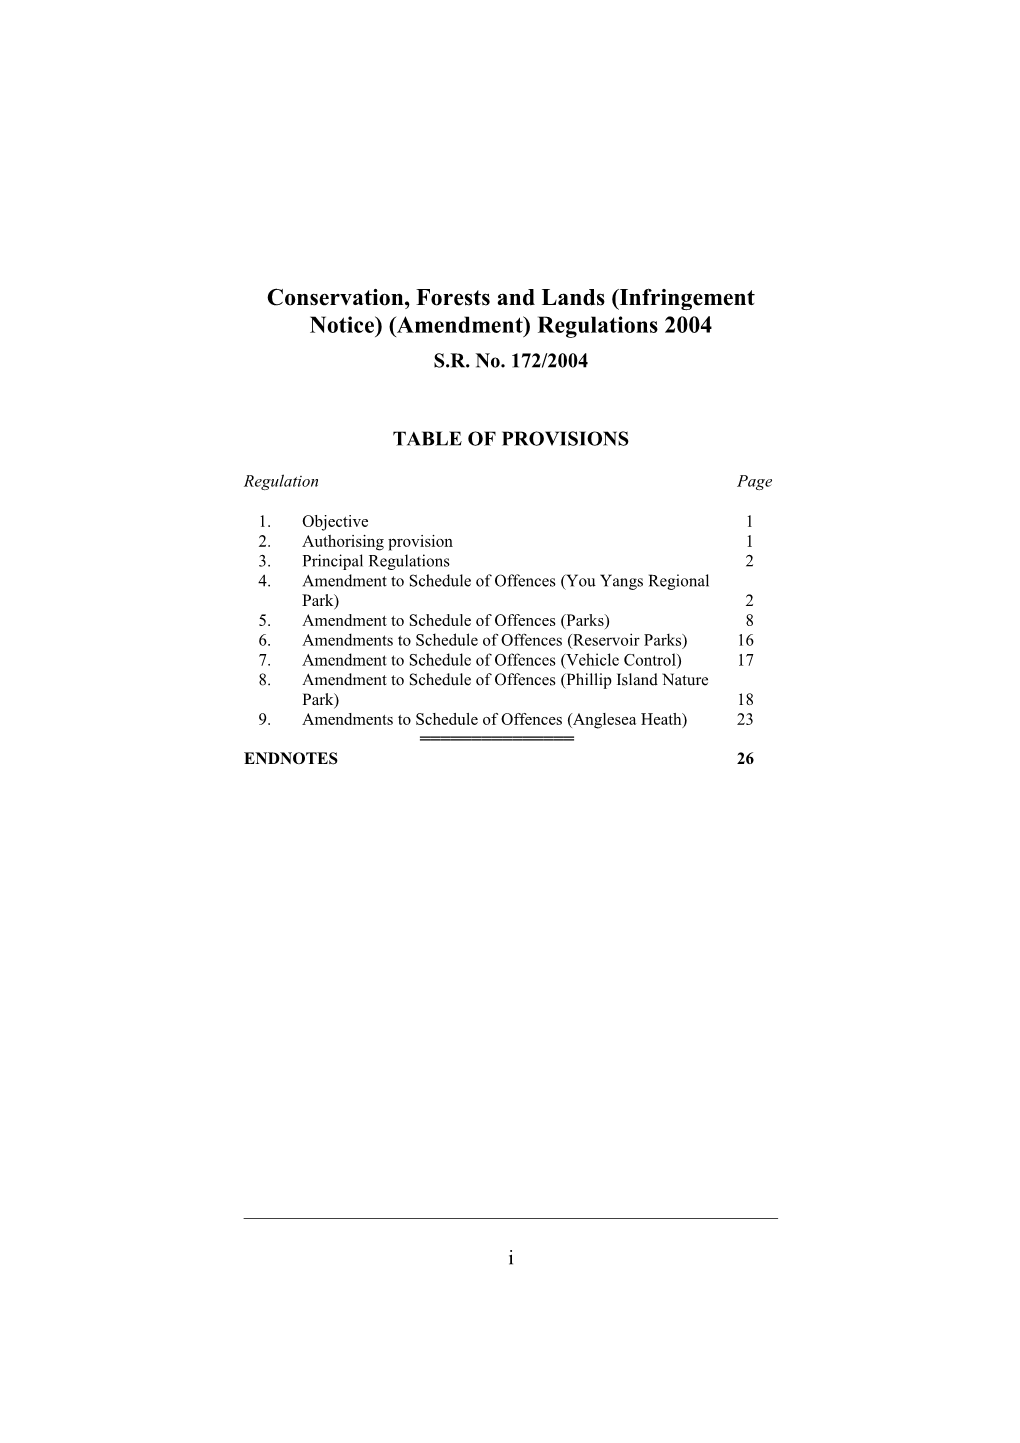 Conservation, Forests and Lands (Infringement Notice) (Amendment) Regulations 2004